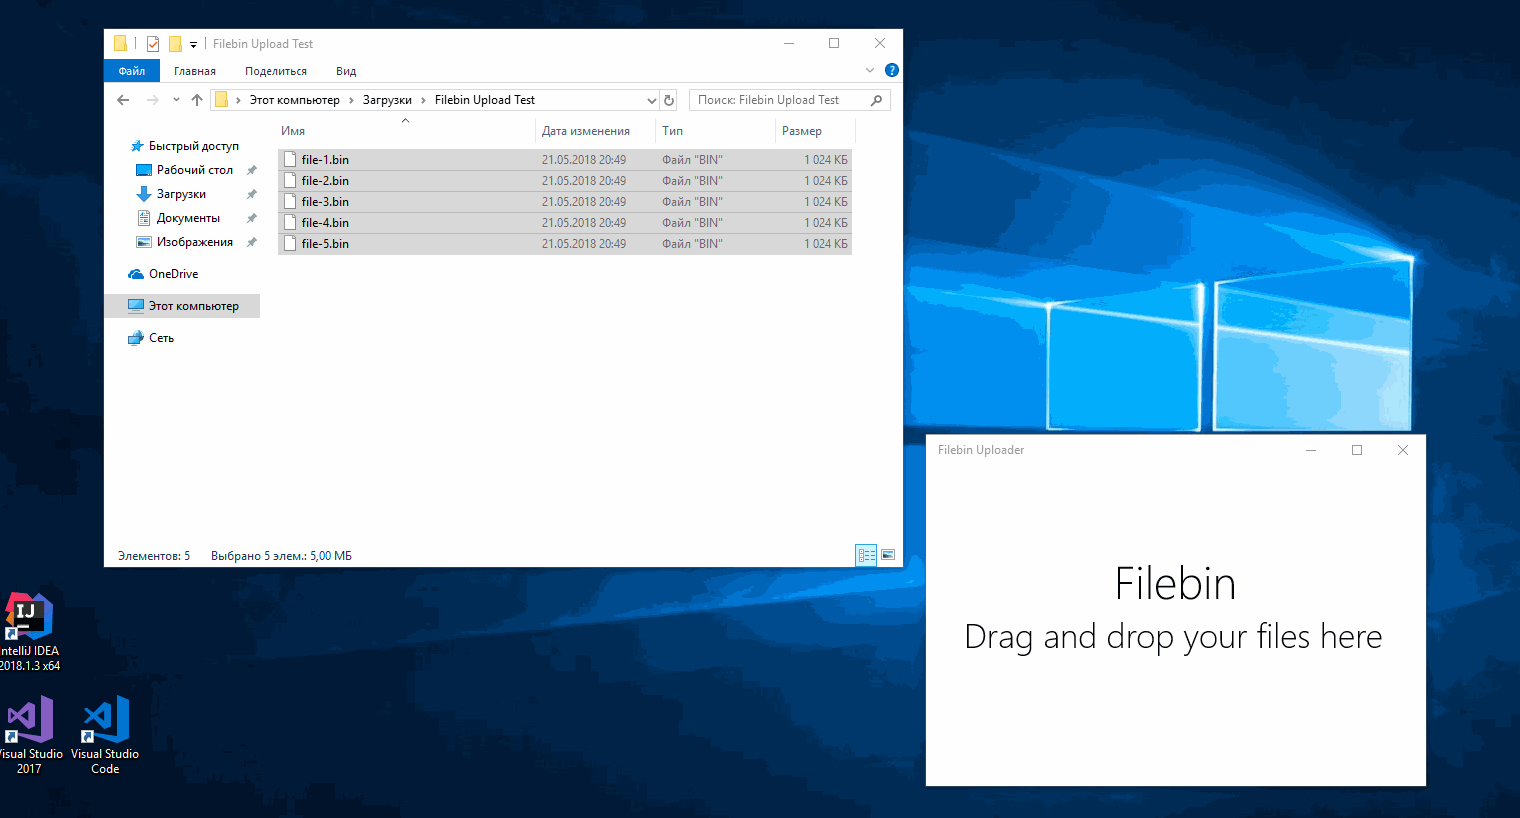 Animation of Filebin Upload client